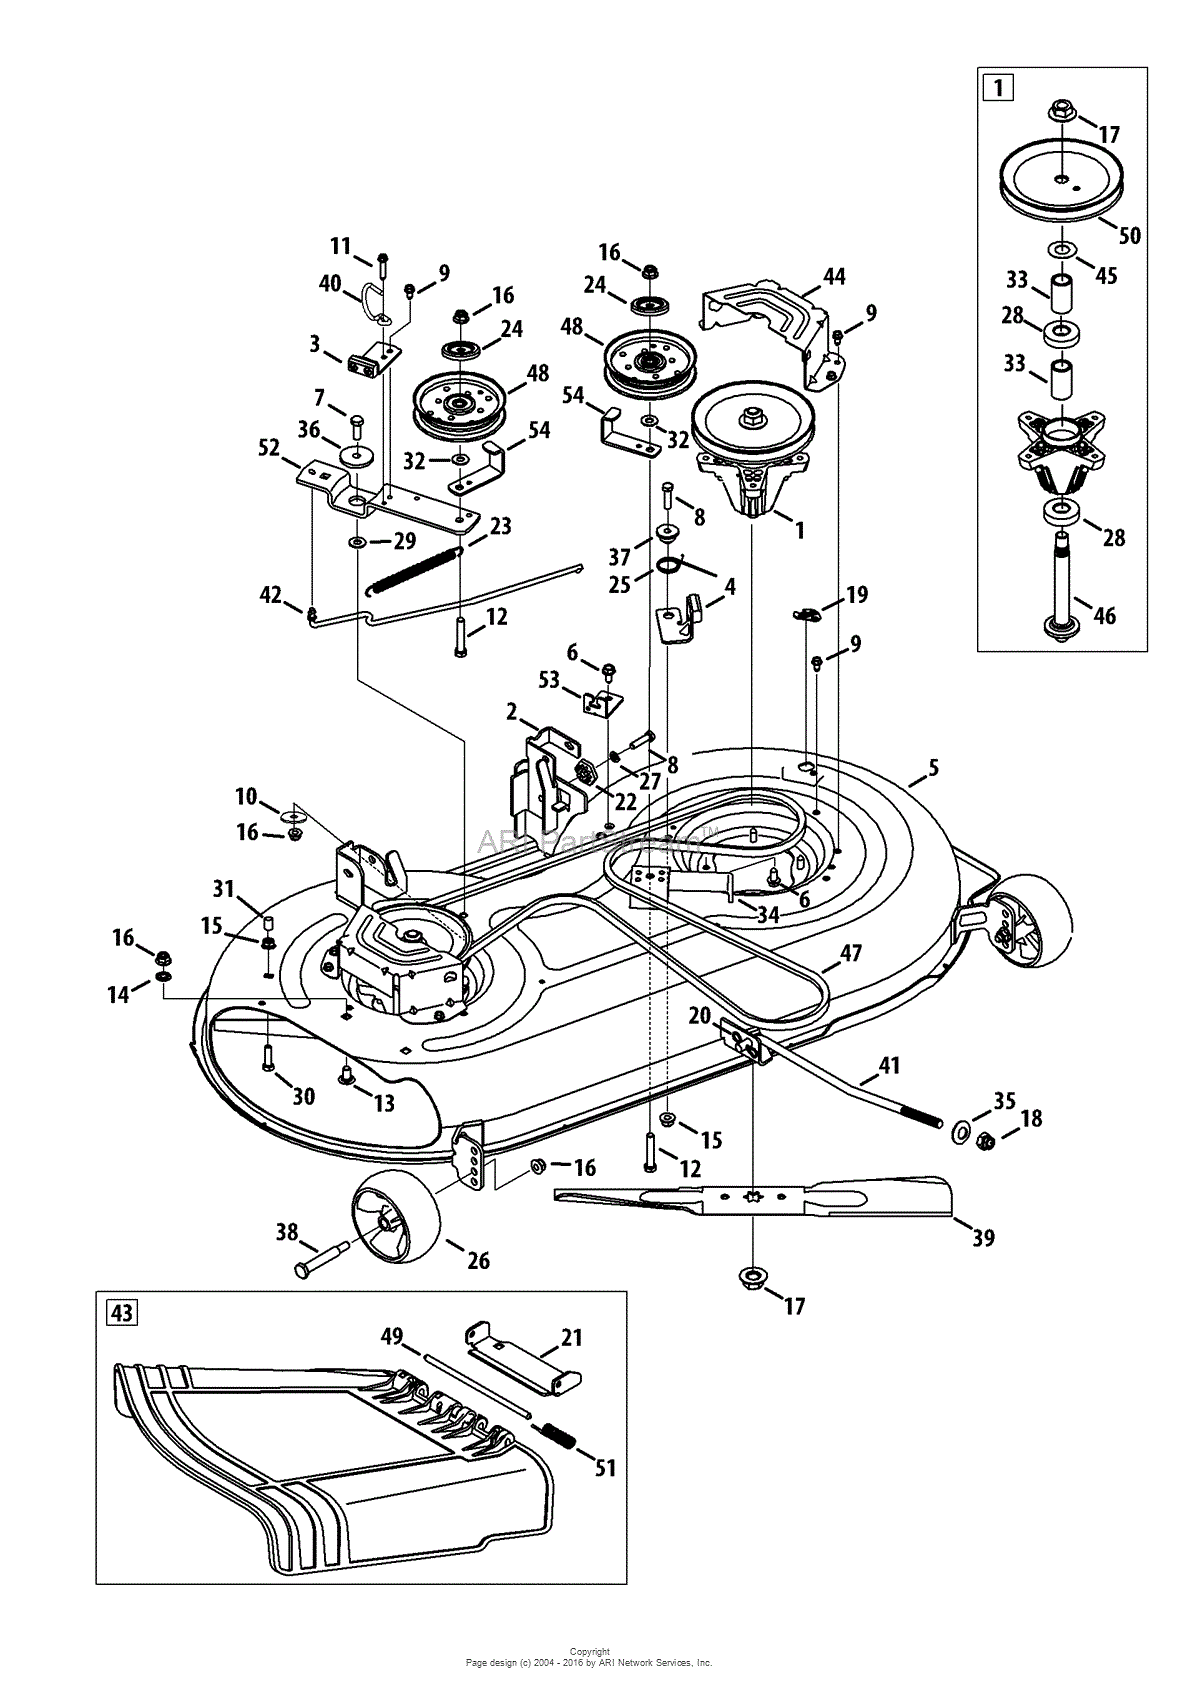 35 Craftsman Lt2000 Parts Diagram - Wiring Diagram List